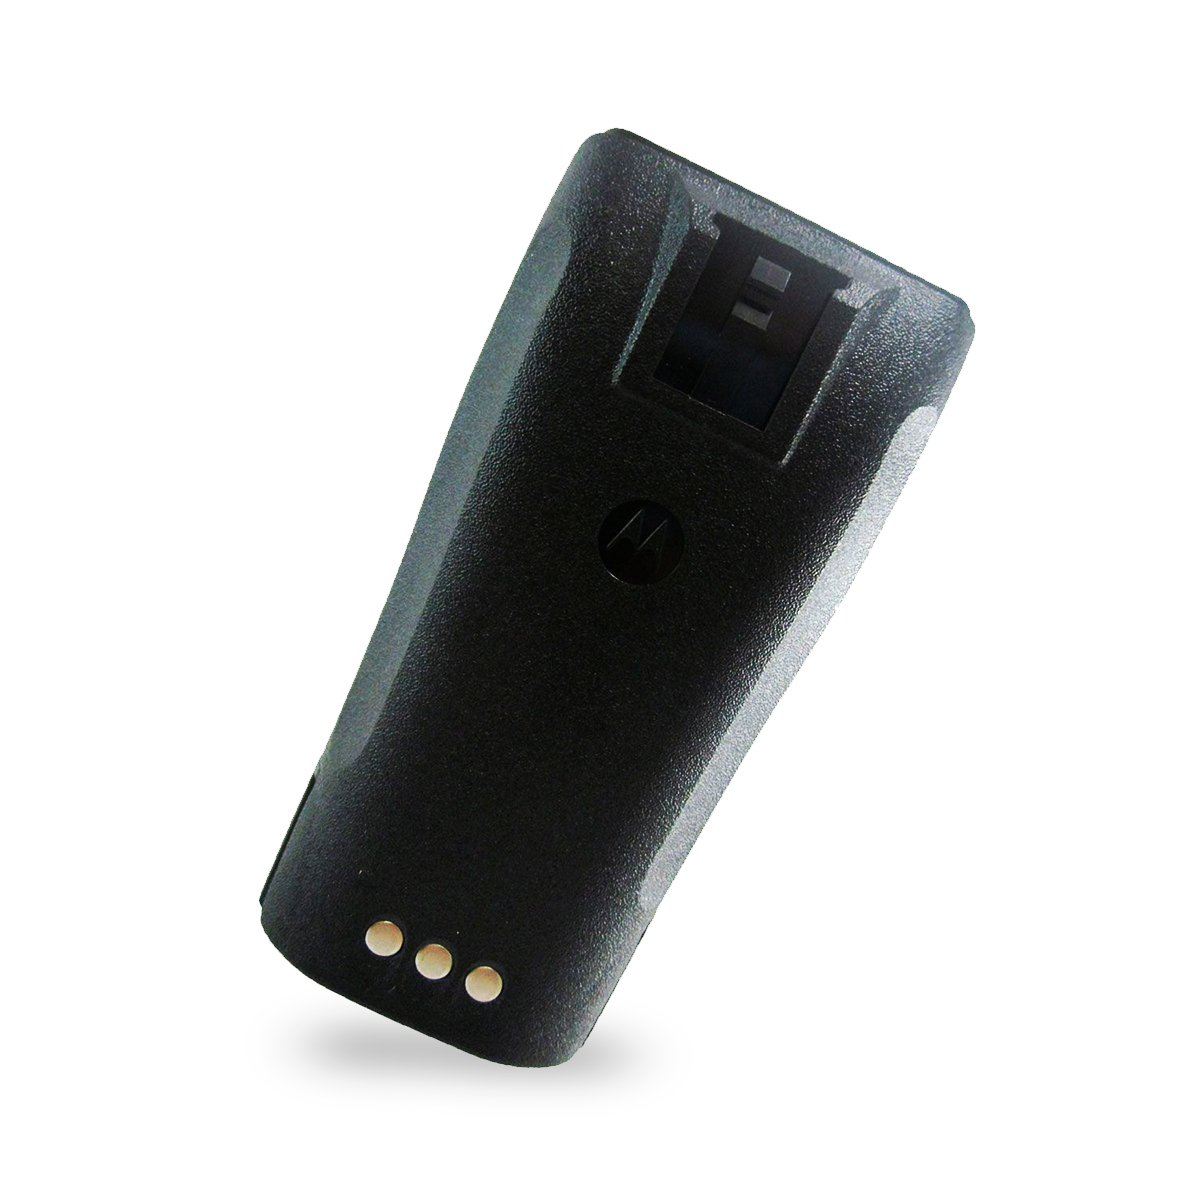 Batería Motorola Li-Ion 2250 mAh para radio DEP450 NNTN4497A